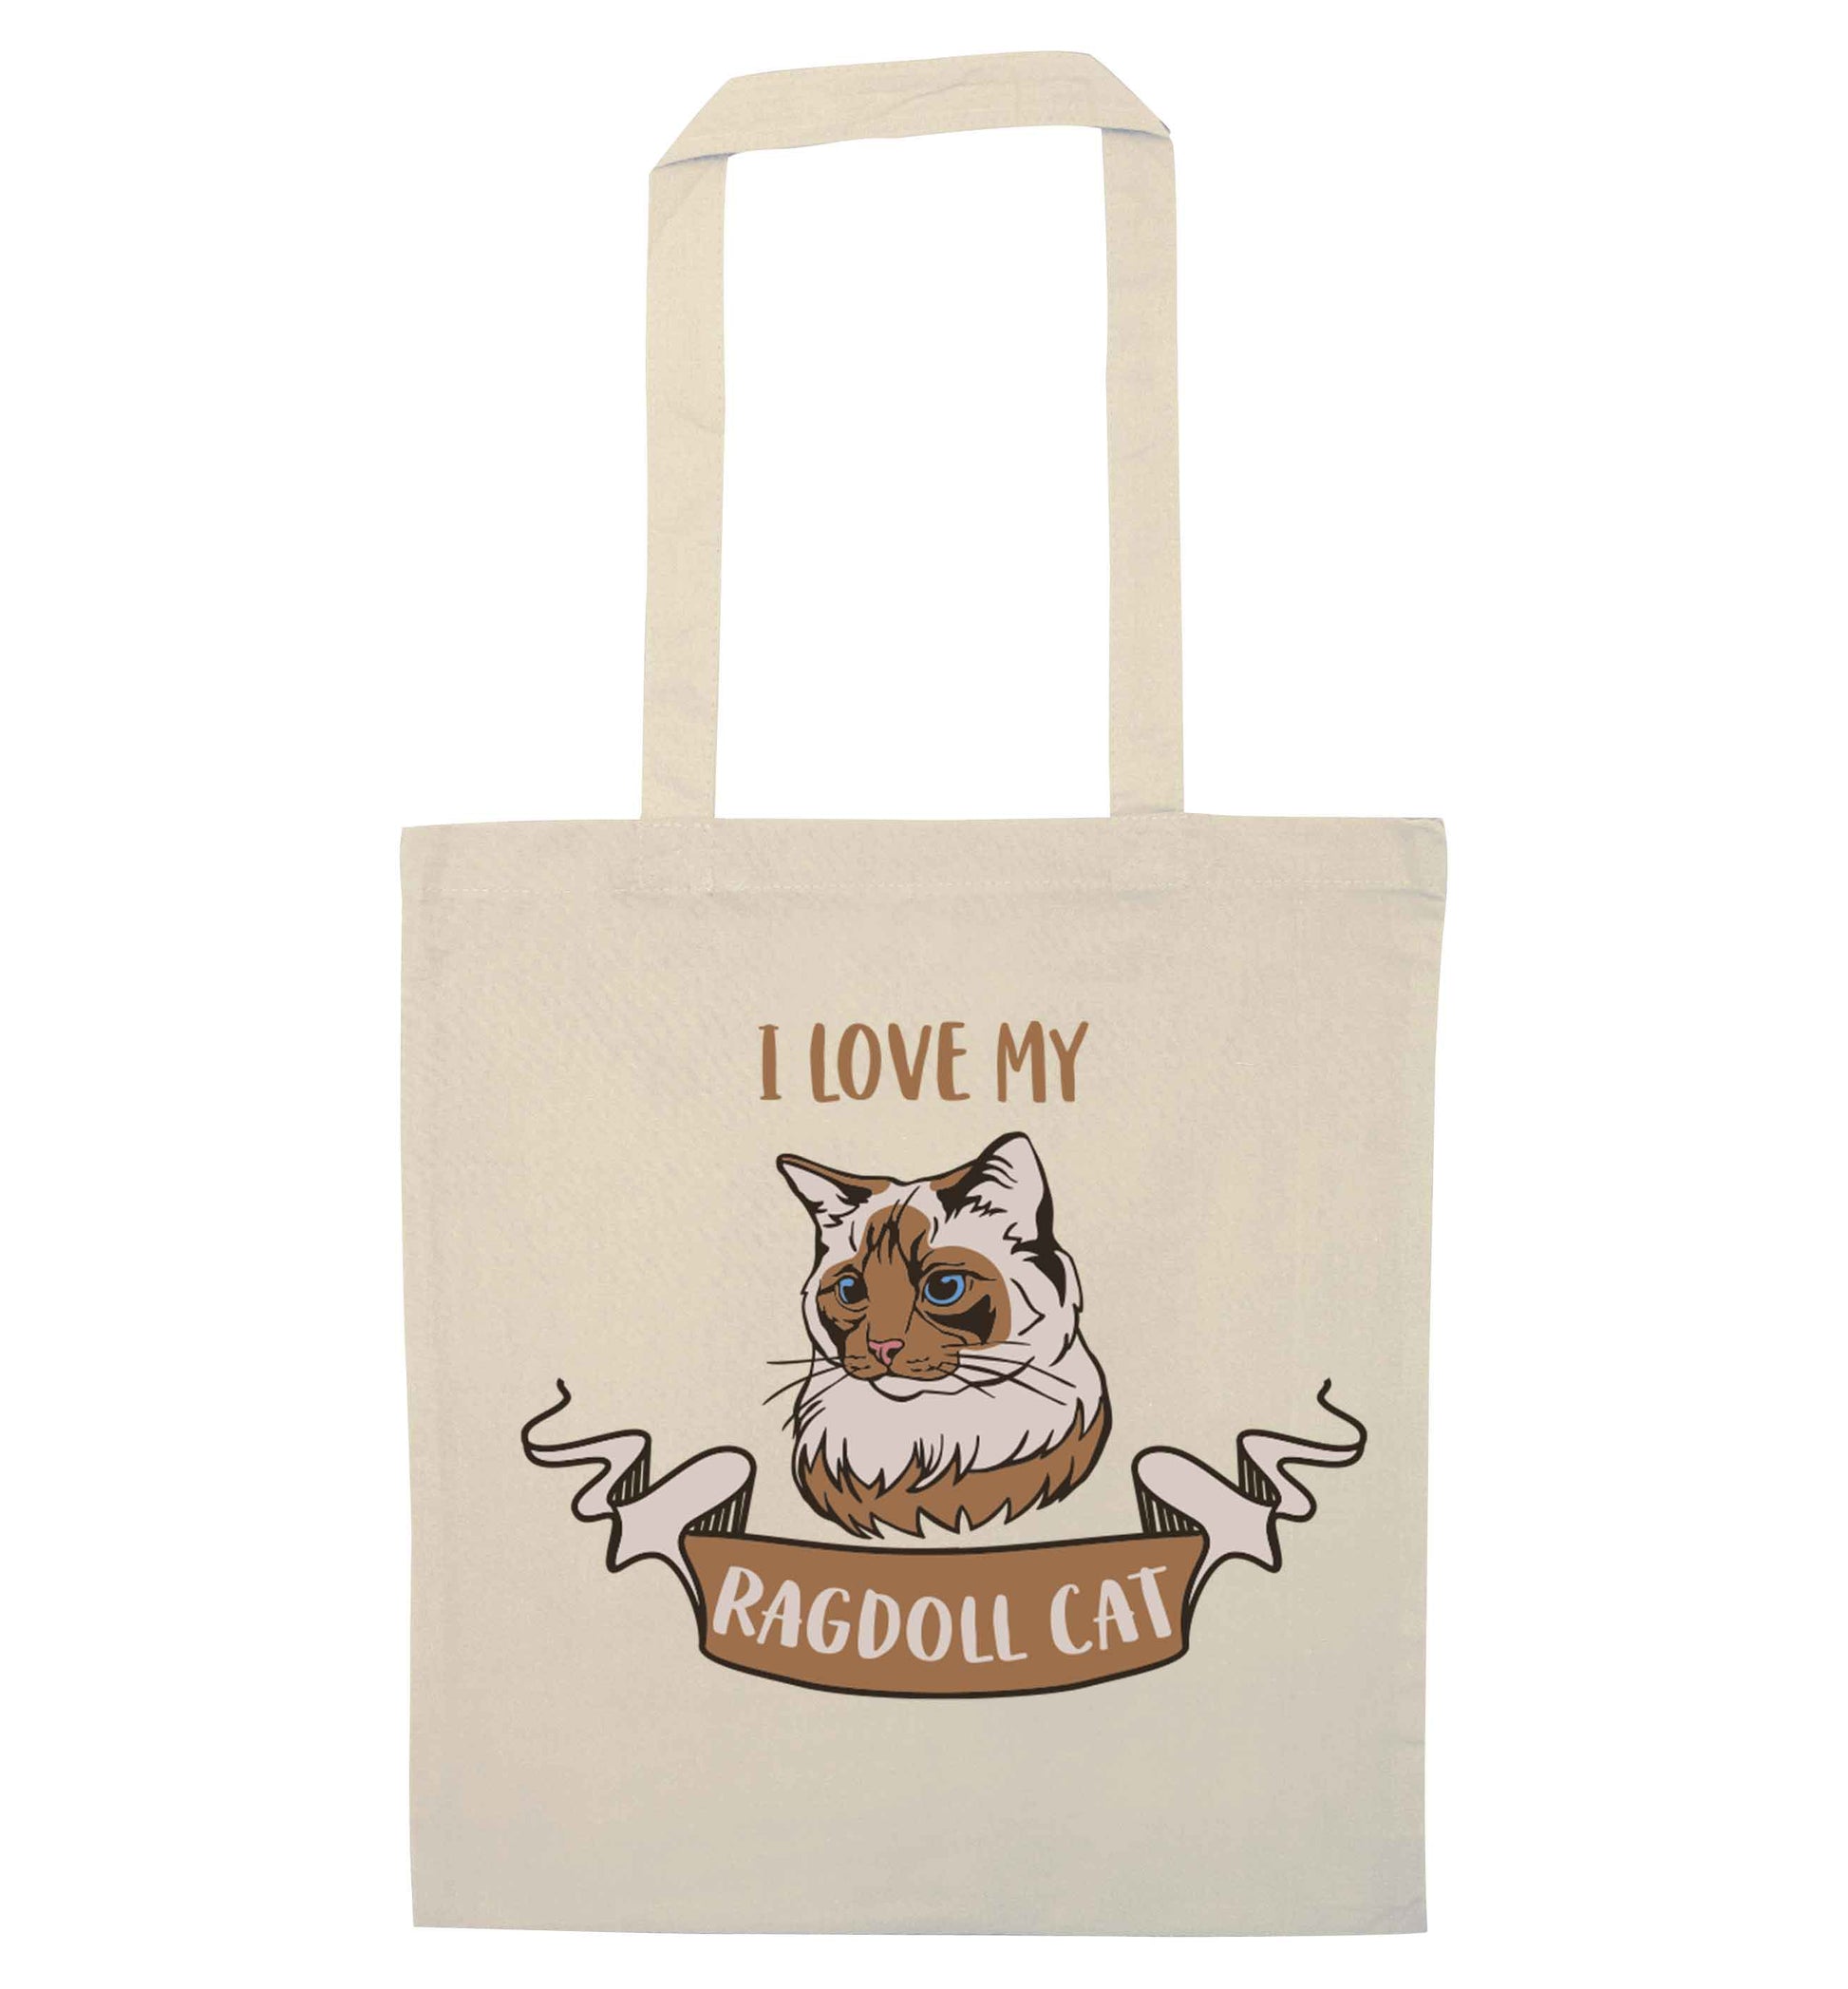 I love my ragdoll cat natural tote bag